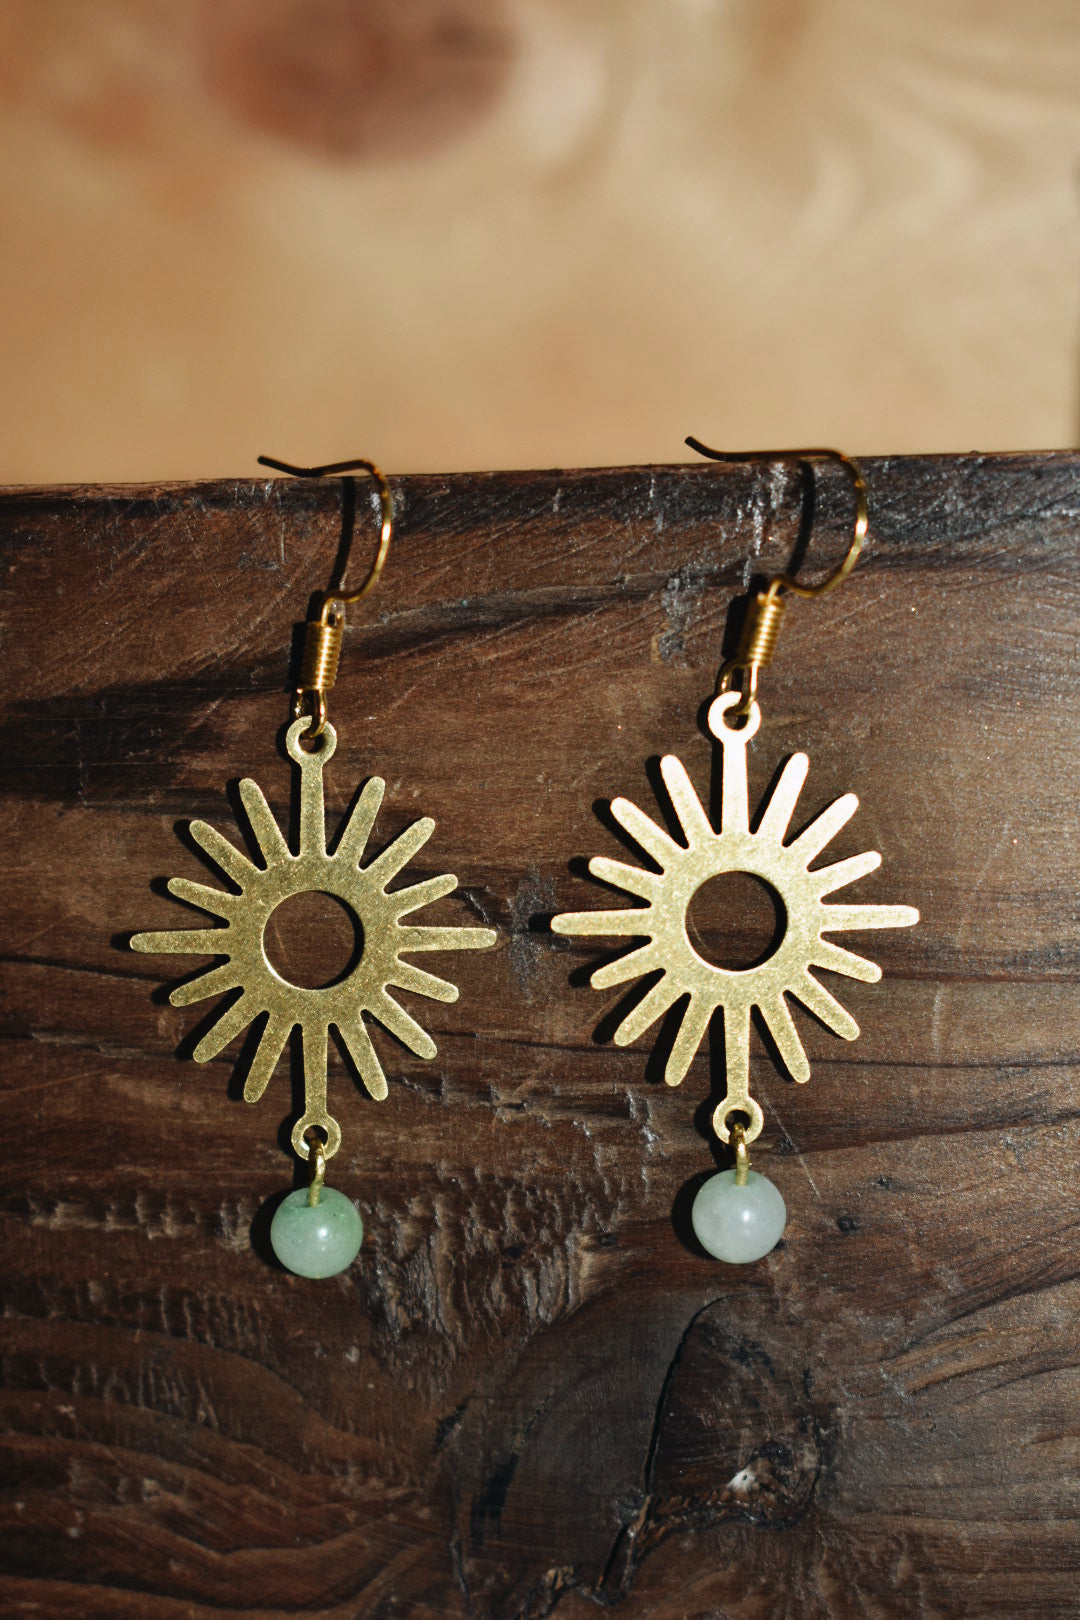  green aventurine beads with a raw brass sun pendant gold earrings